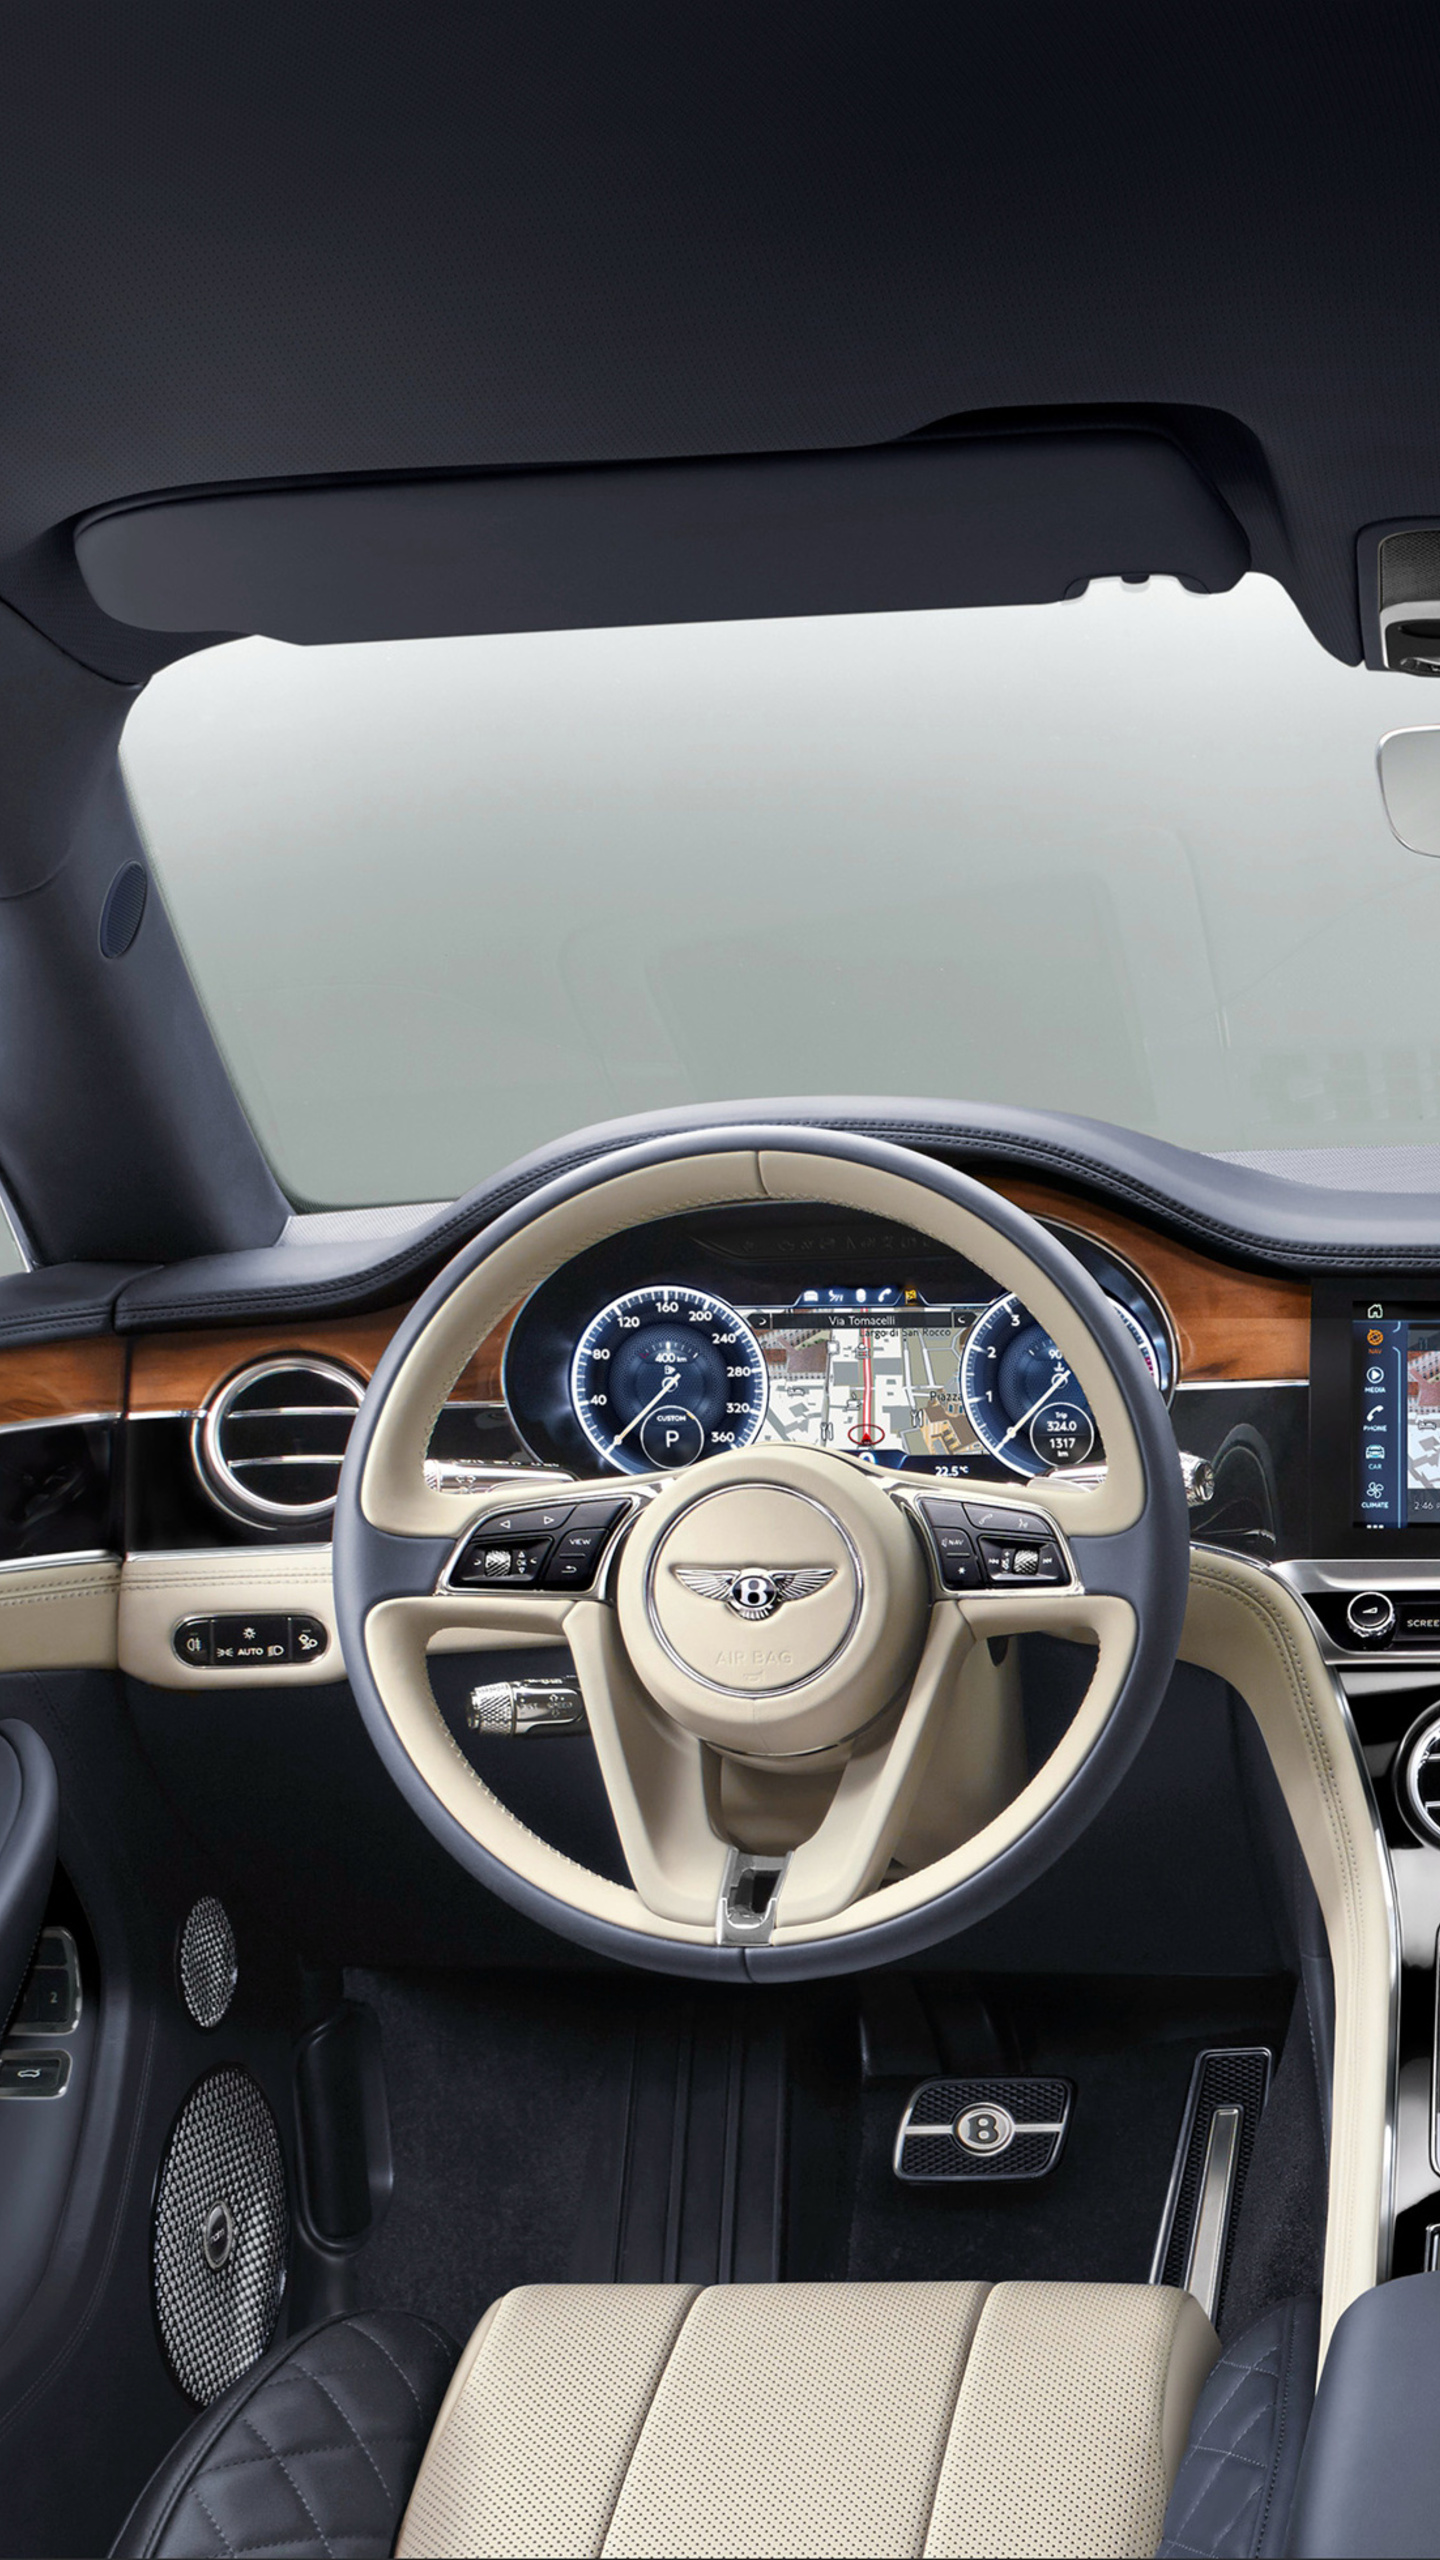 Bentley Continental GT 2017 Interior Samsung Galaxy S S7 , Google Pixel XL , Nexus 6P , LG G5 HD 4k Wallpaper, Image, Background, Photo and Picture